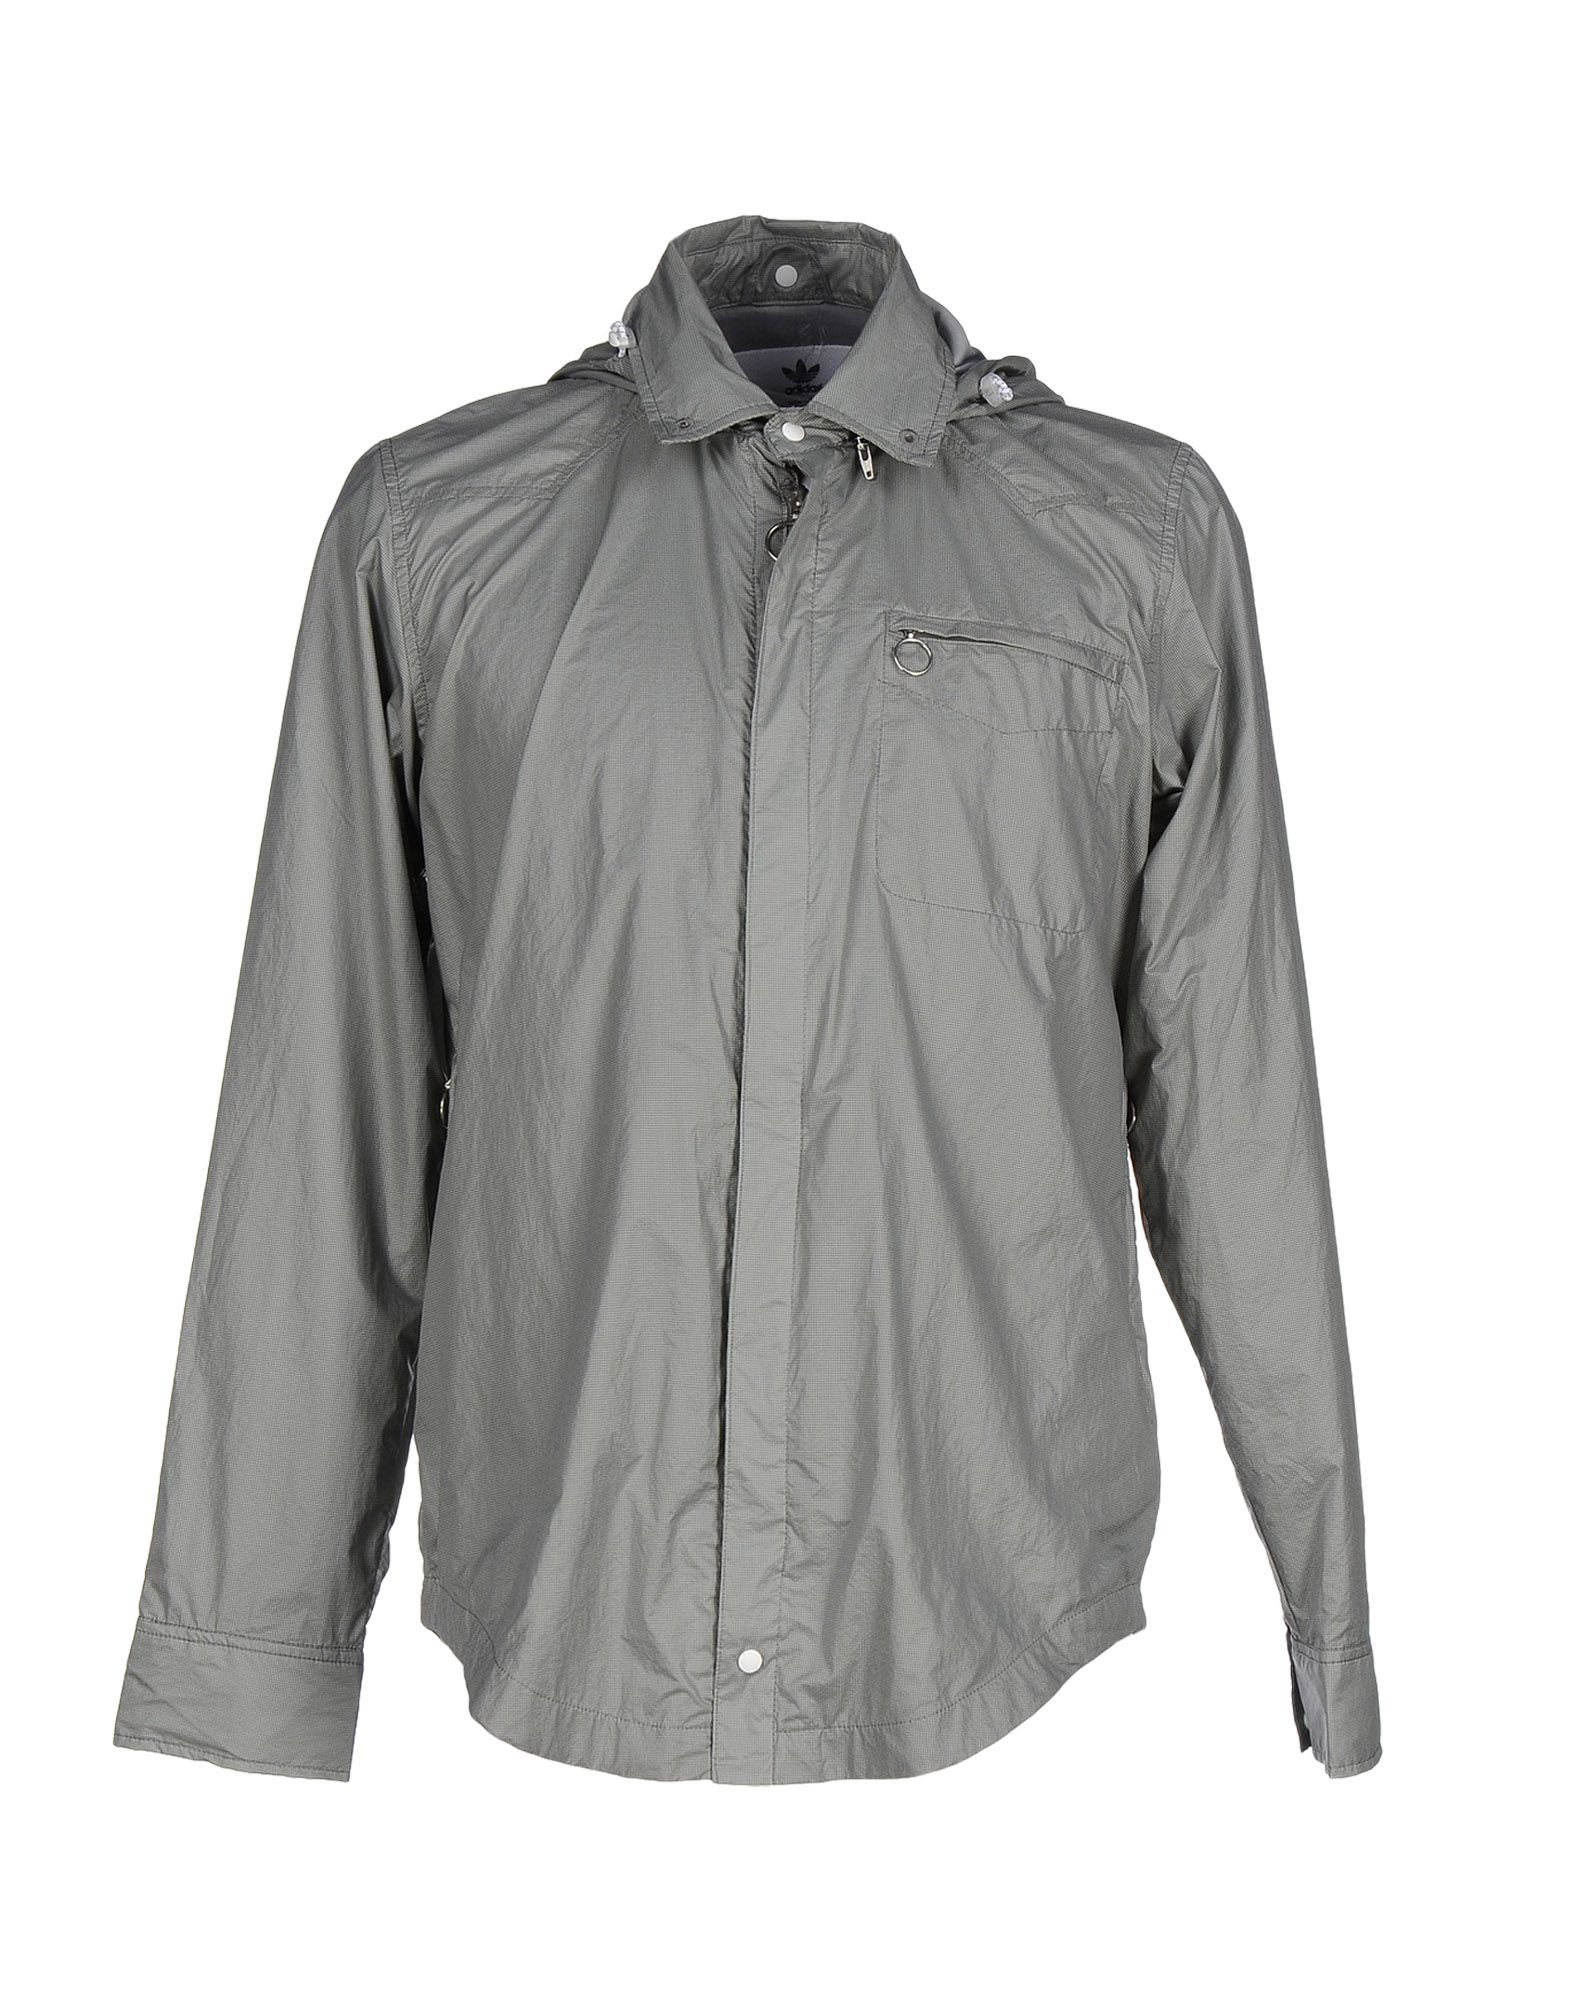 Lyst - Adidas Originals Jacket in Gray for Men